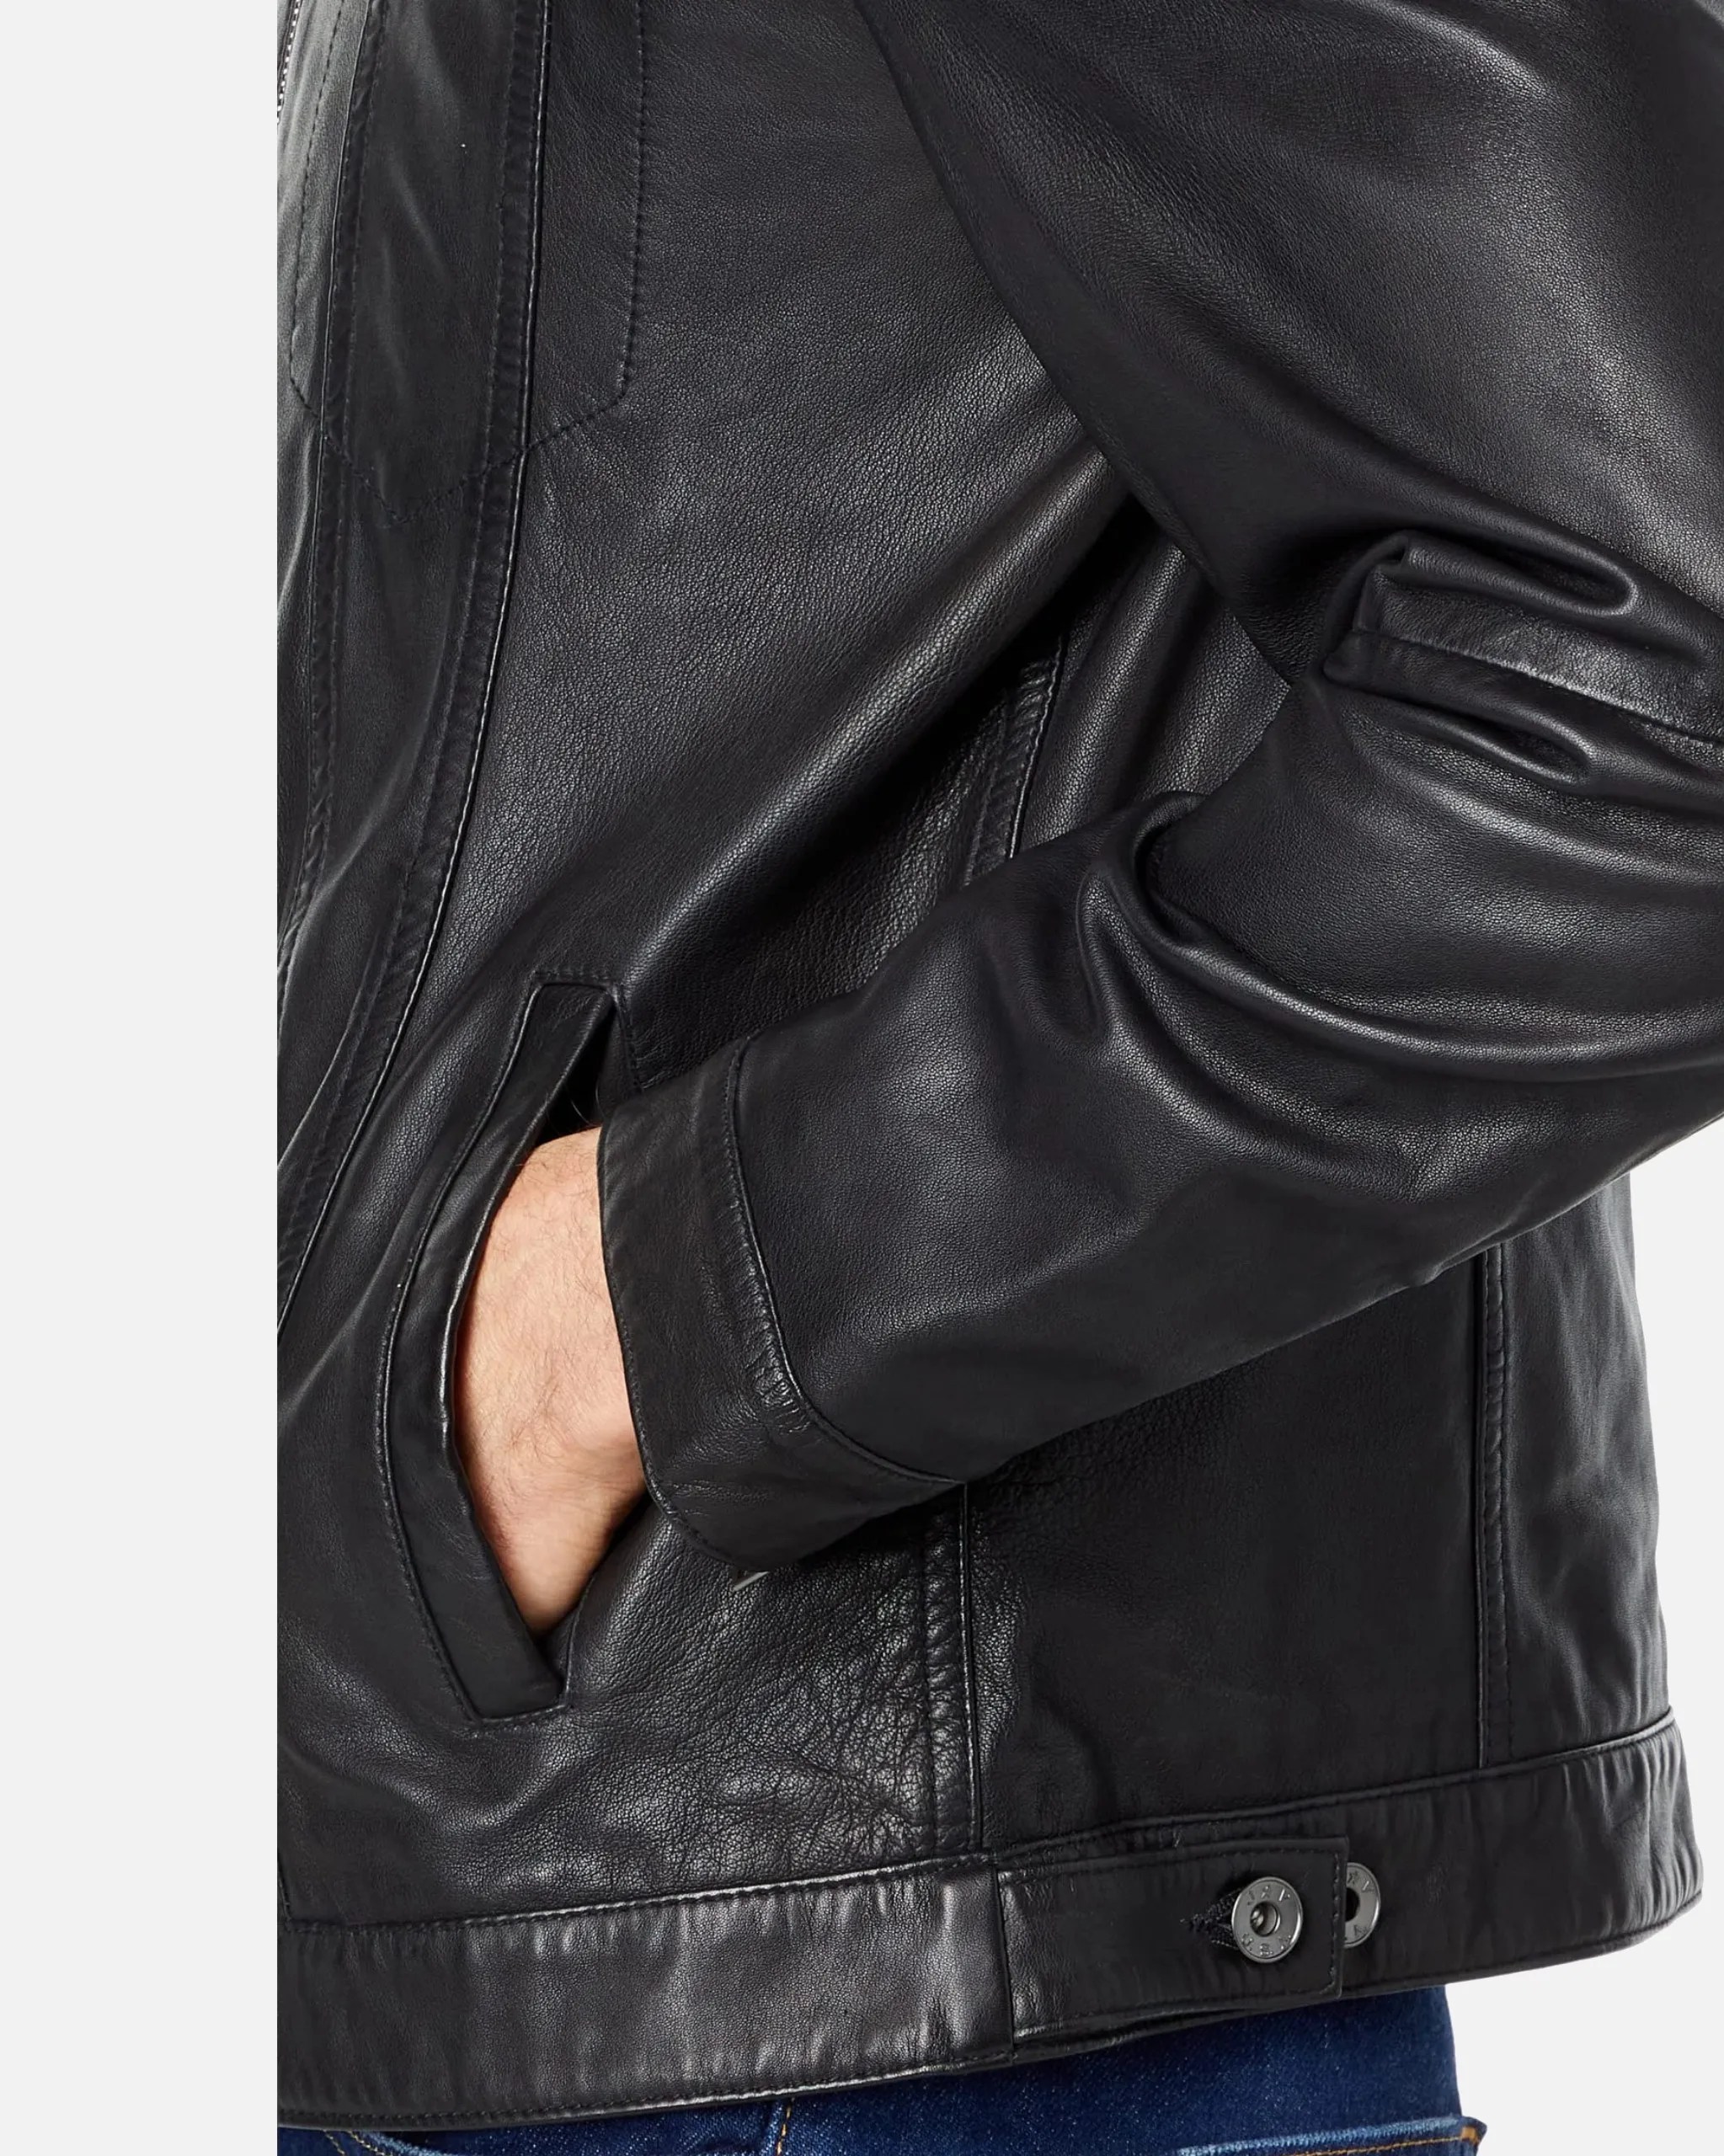 band-collar-racer-jacket-100-genuine-lambskin-leather (3)